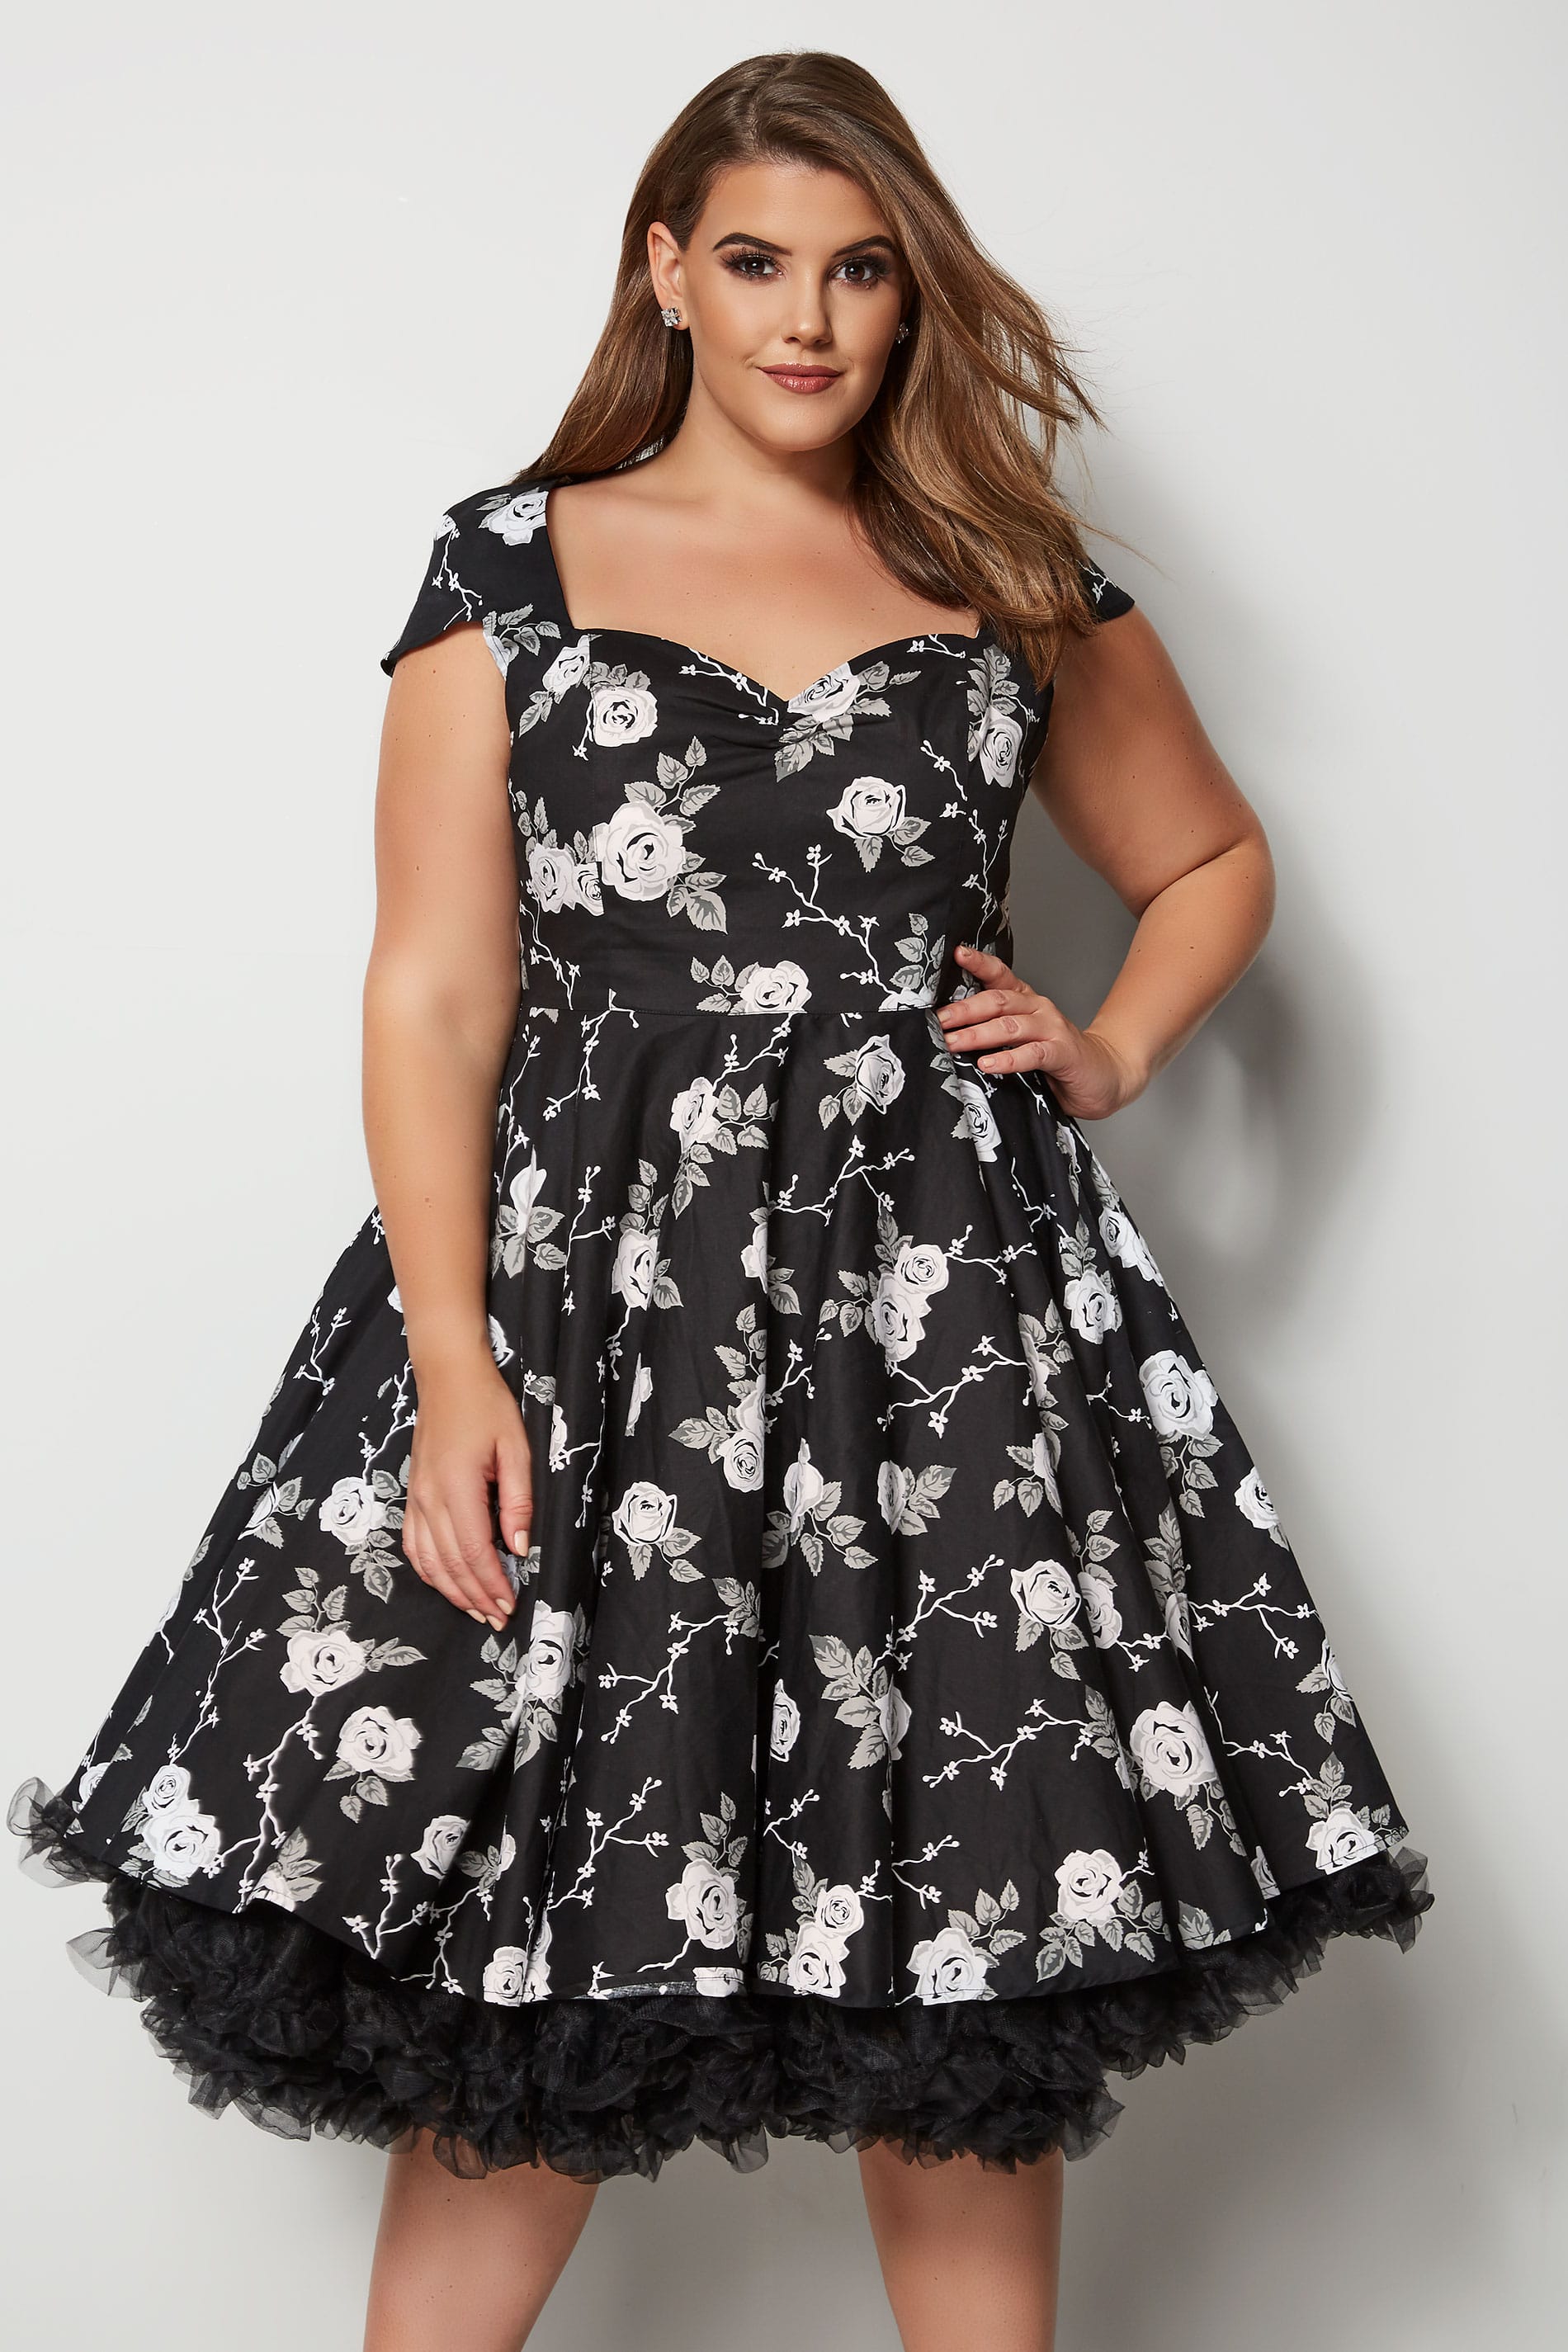 HELL BUNNY Black & White Floral Print Natalia Dress, plus size 16 to 32